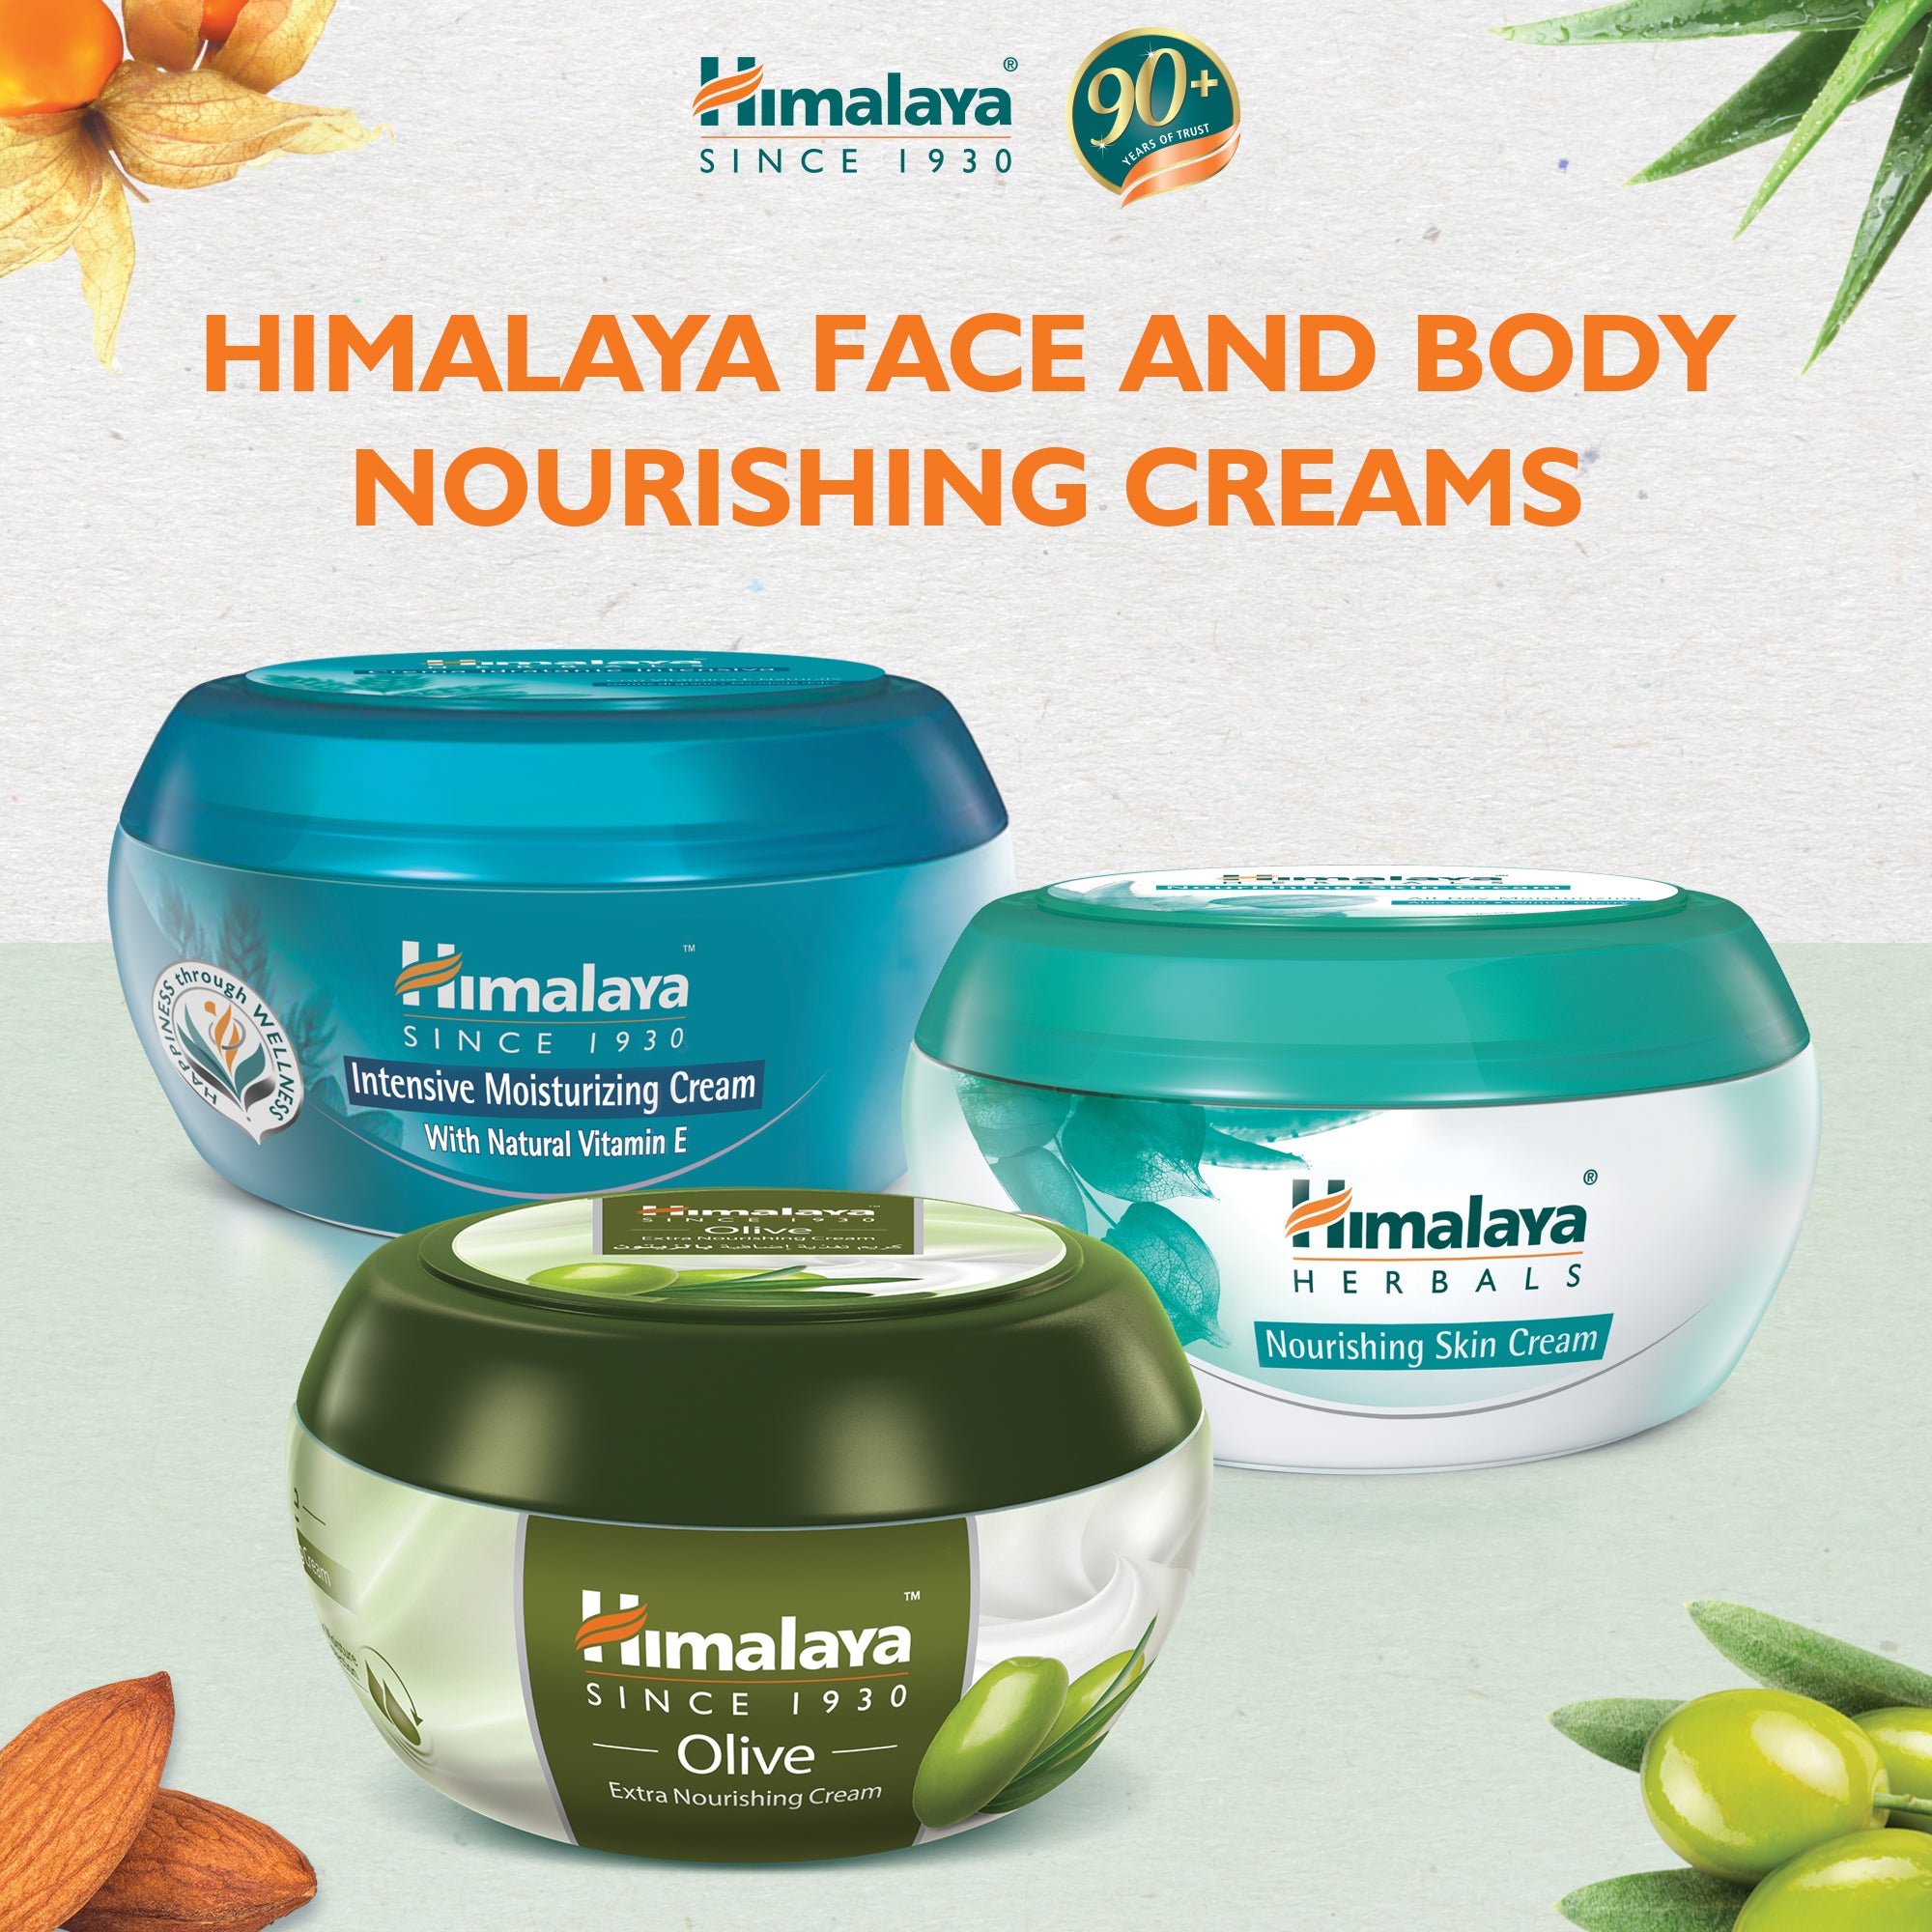 Himalaya Intensive Moisturizing Cream